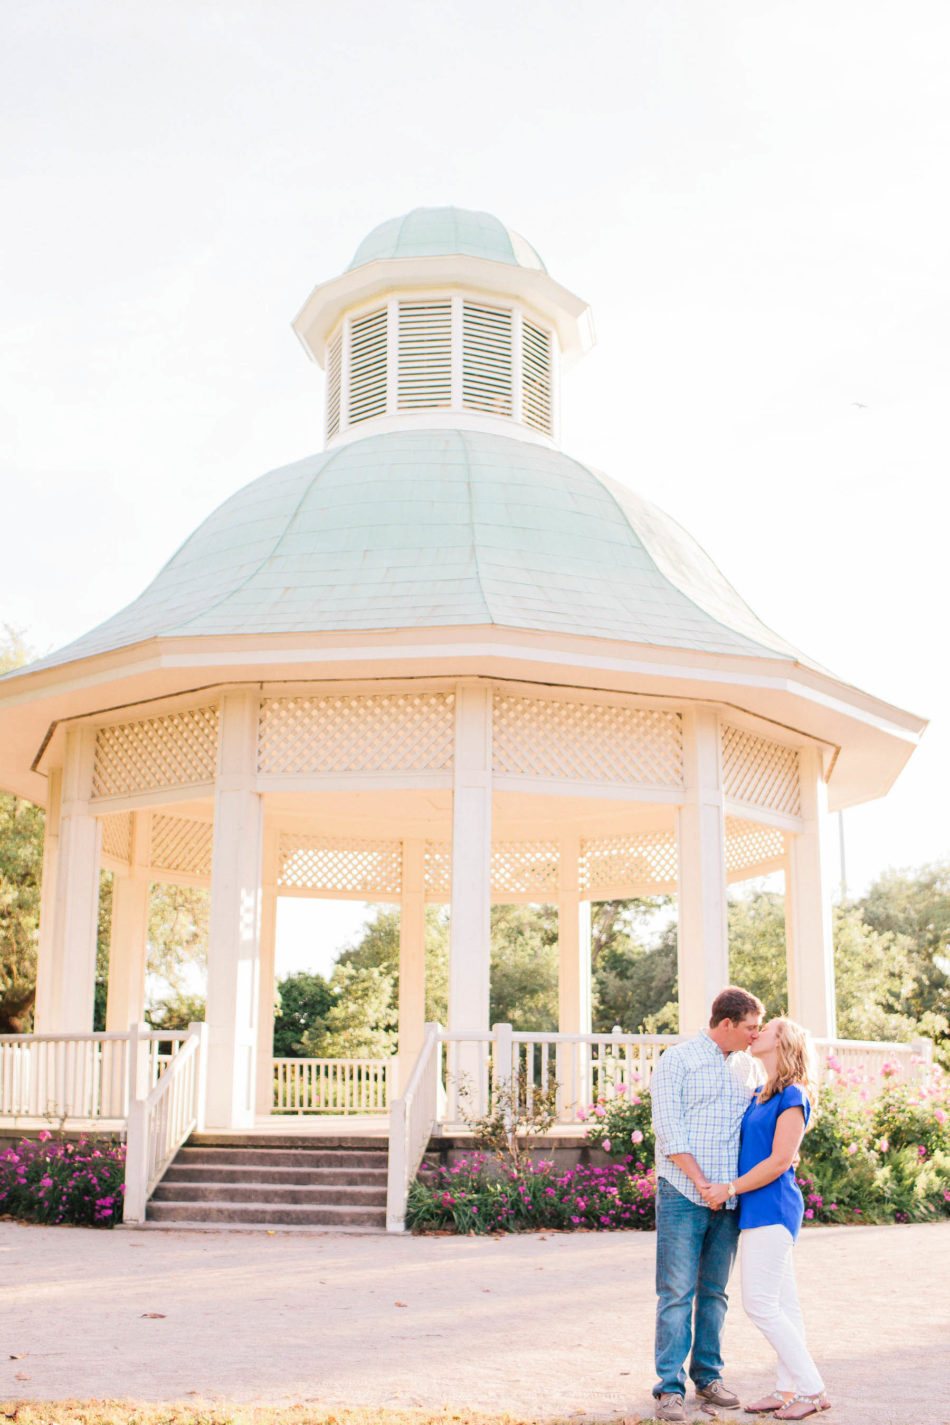 Engaged couple stands by the gazebo, Hampton Park, Charleston, South Carolina Kate Timbers Photography. http://katetimbers.com #katetimbersphotography // Charleston Photography // Inspiration